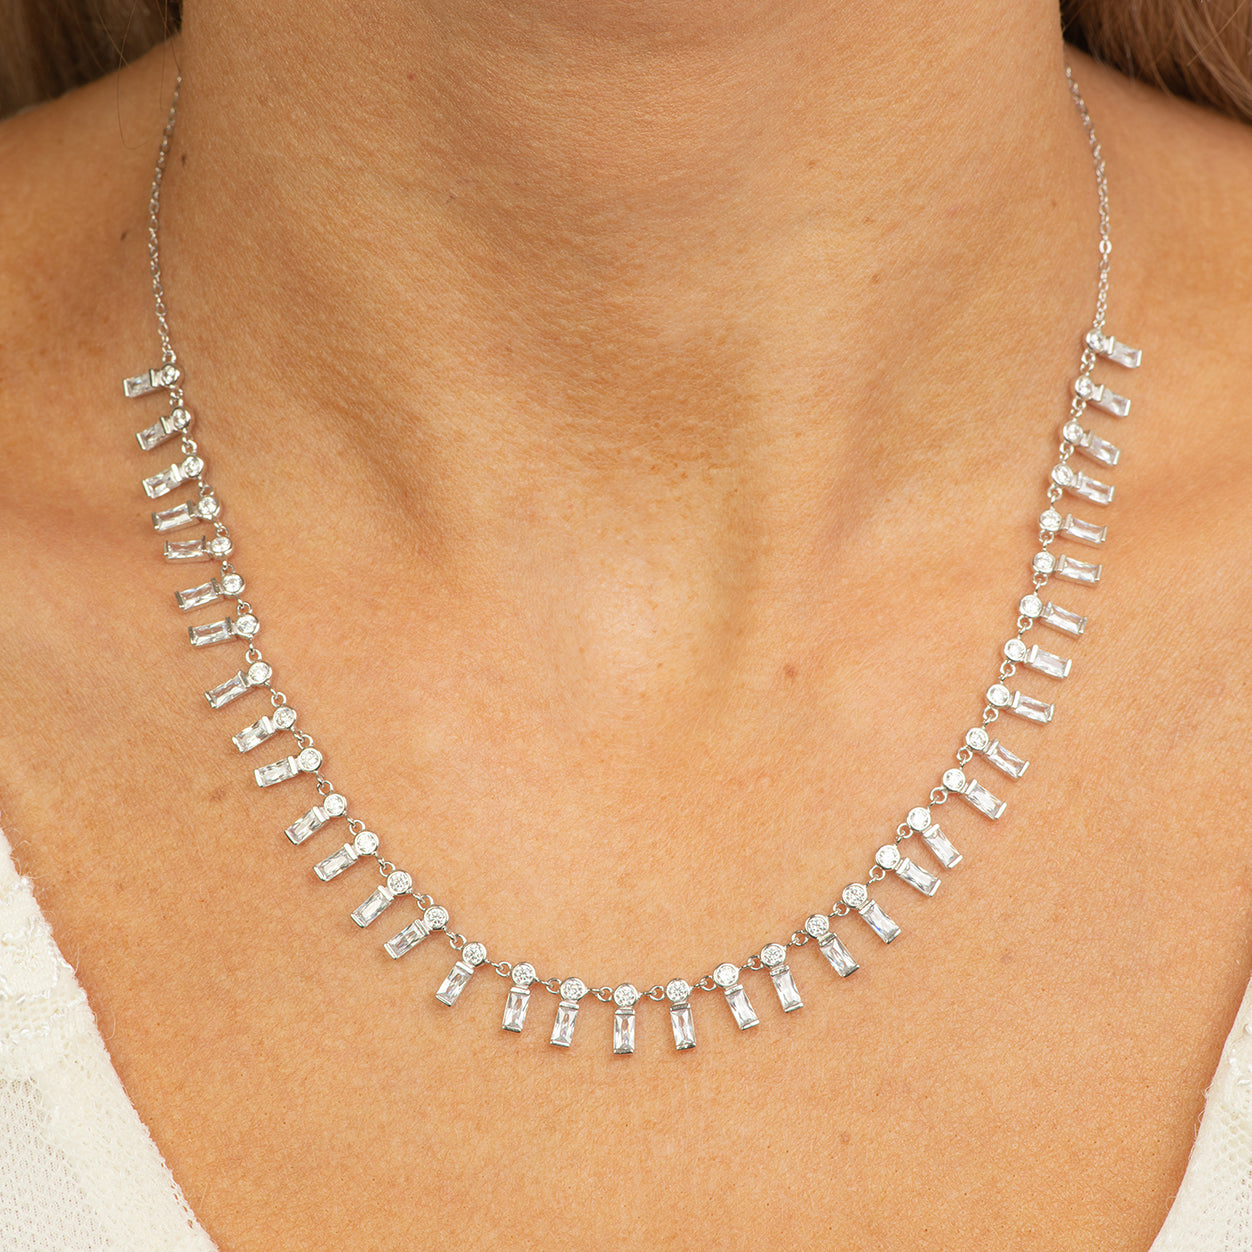 DK-925-426 Pending crystals on adjustable necklace